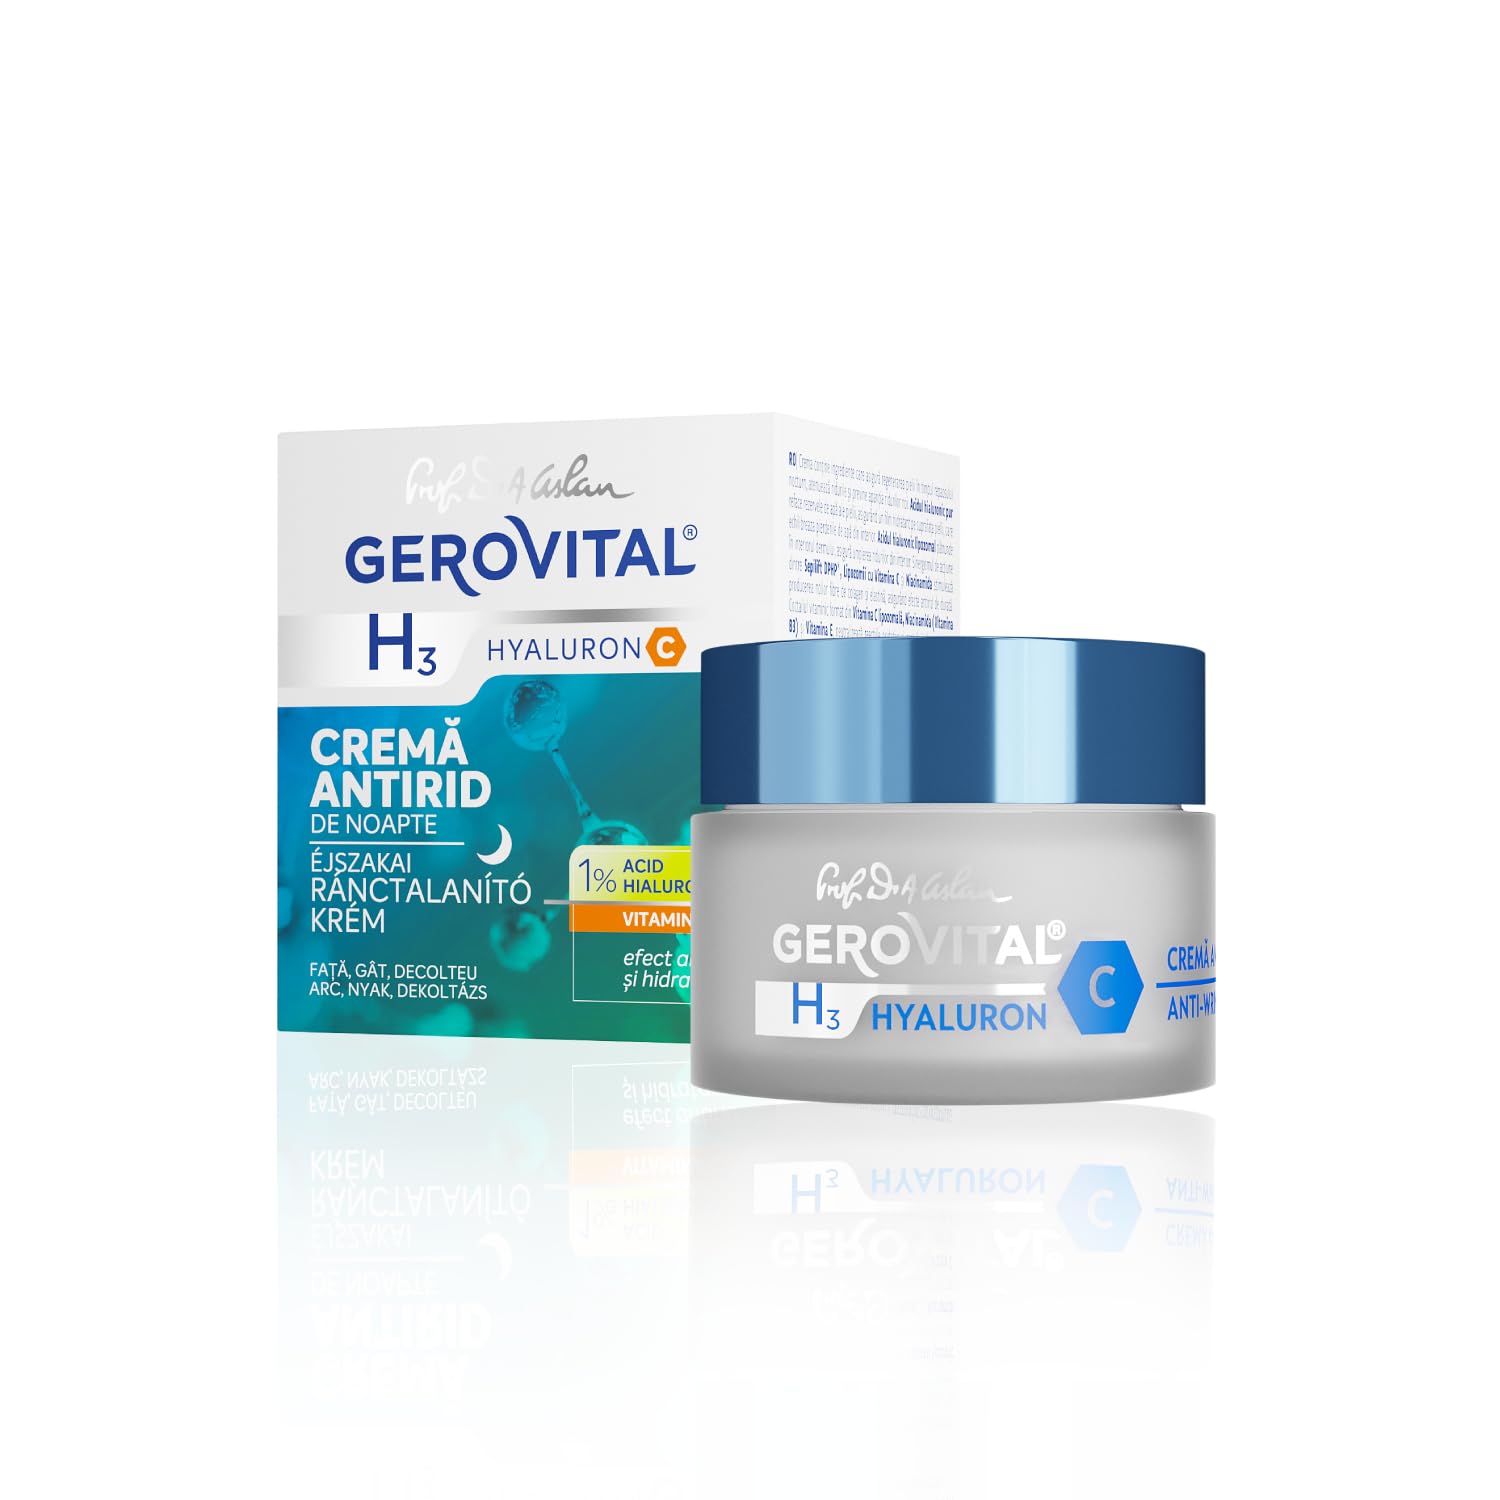 Gerovital H3 - Hyaluronic C, Intensive Anti Wrinkle cream (night care)